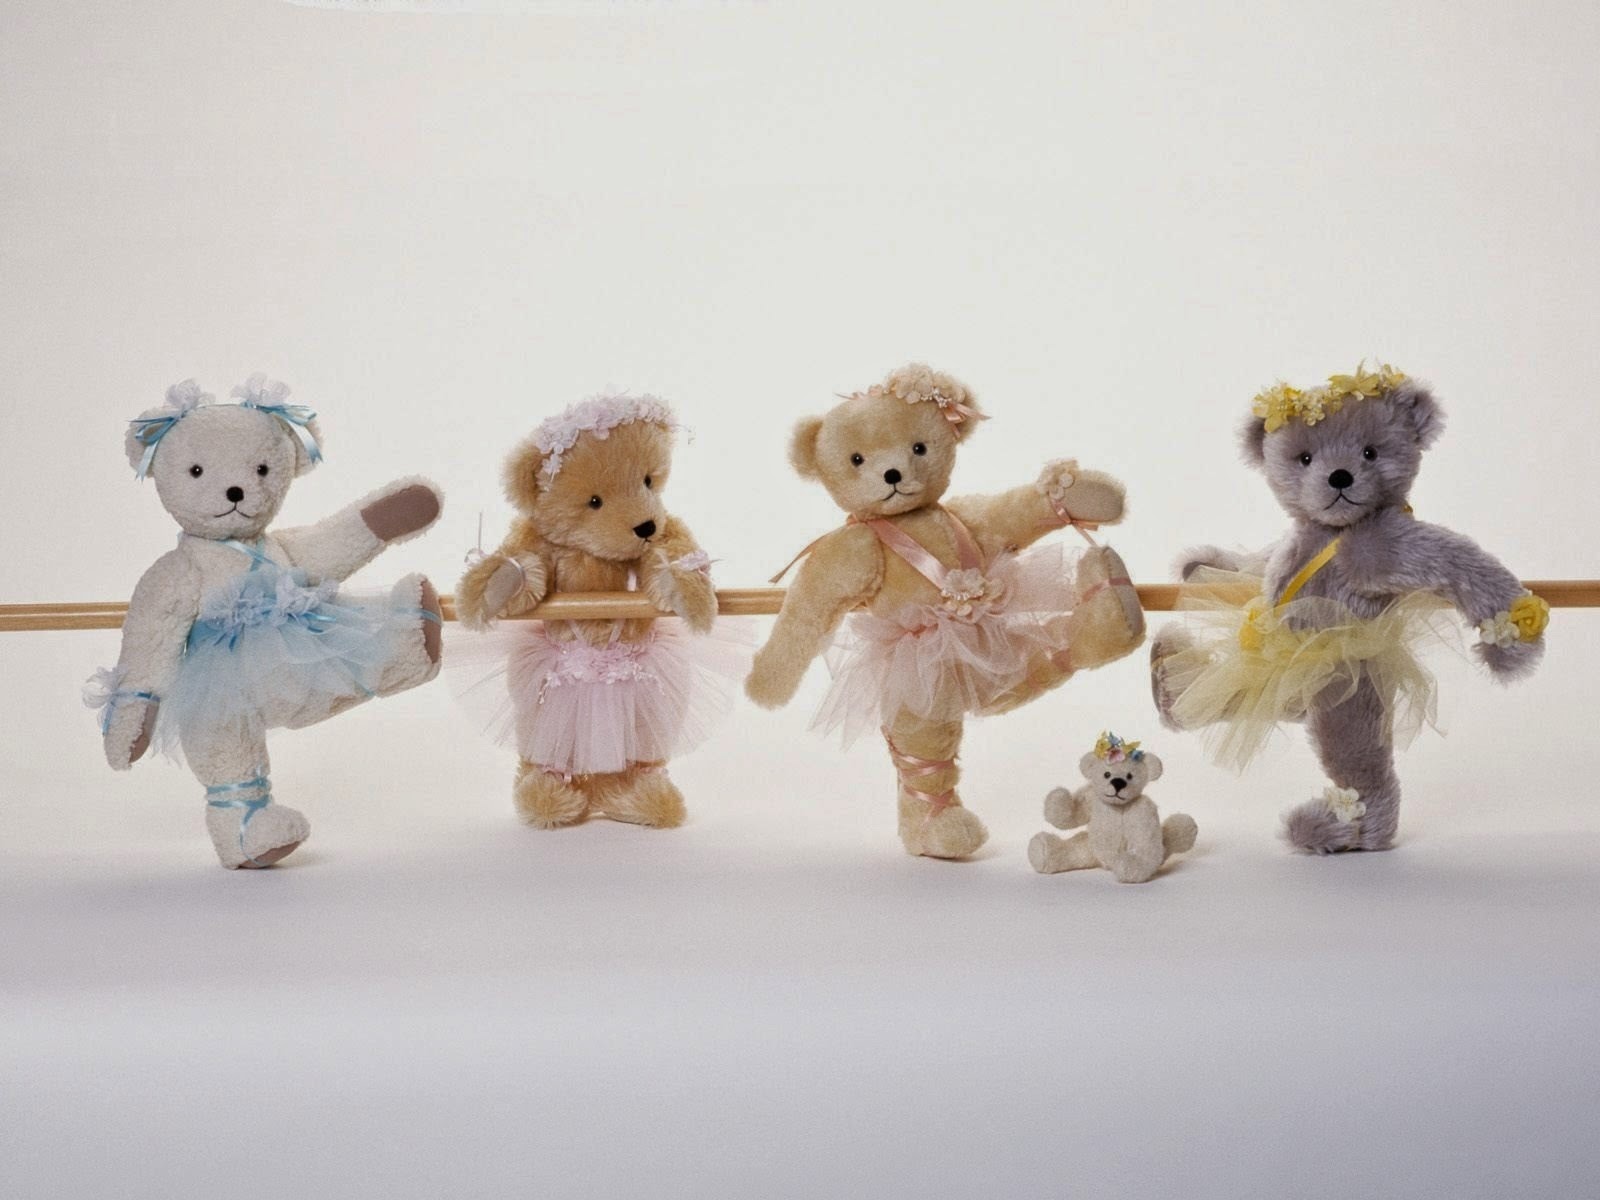 Cute Teddy Bear Wallpapers For Little Kids And Children - Hug From A Friend - HD Wallpaper 